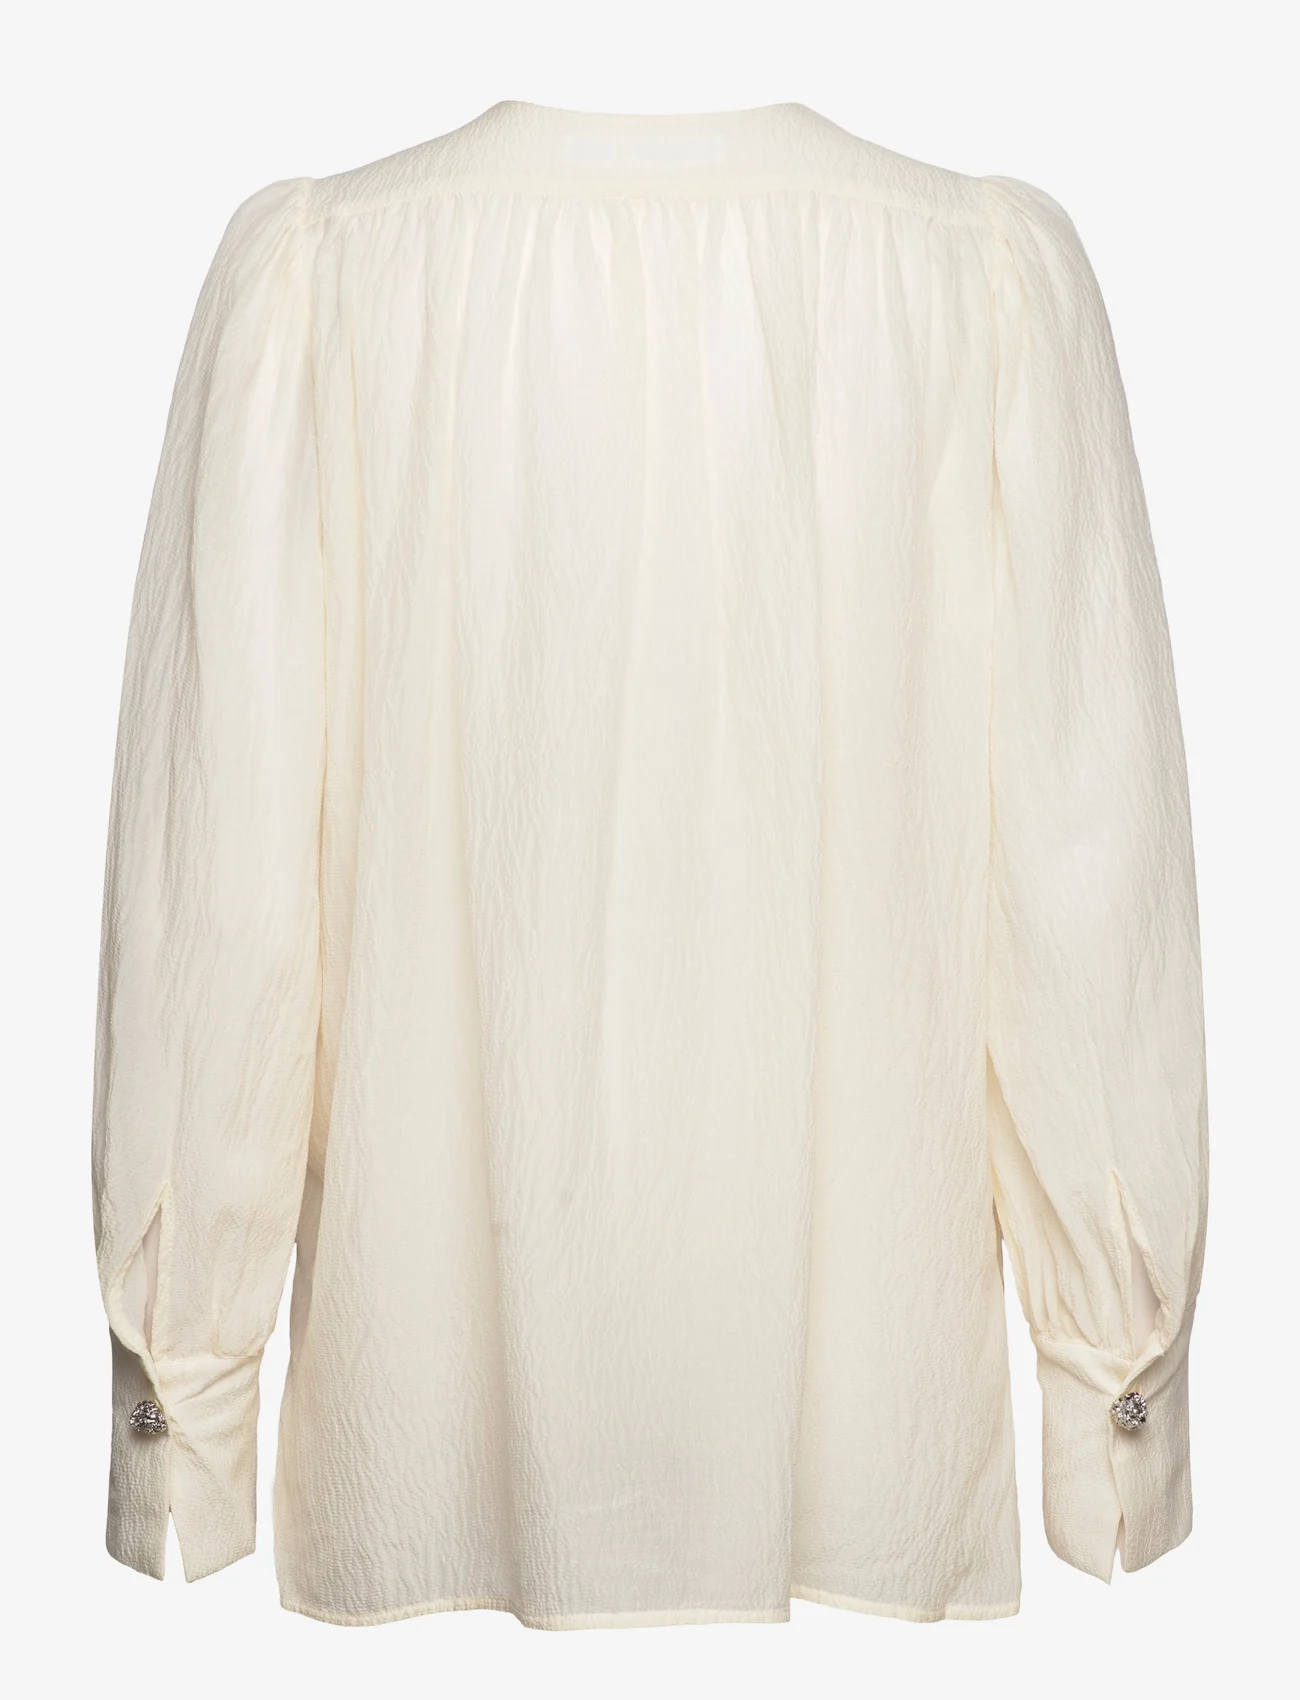 Day Birger et Mikkelsen - Logan - Cotton Silk Texture - long-sleeved blouses - vanilla ice - 1